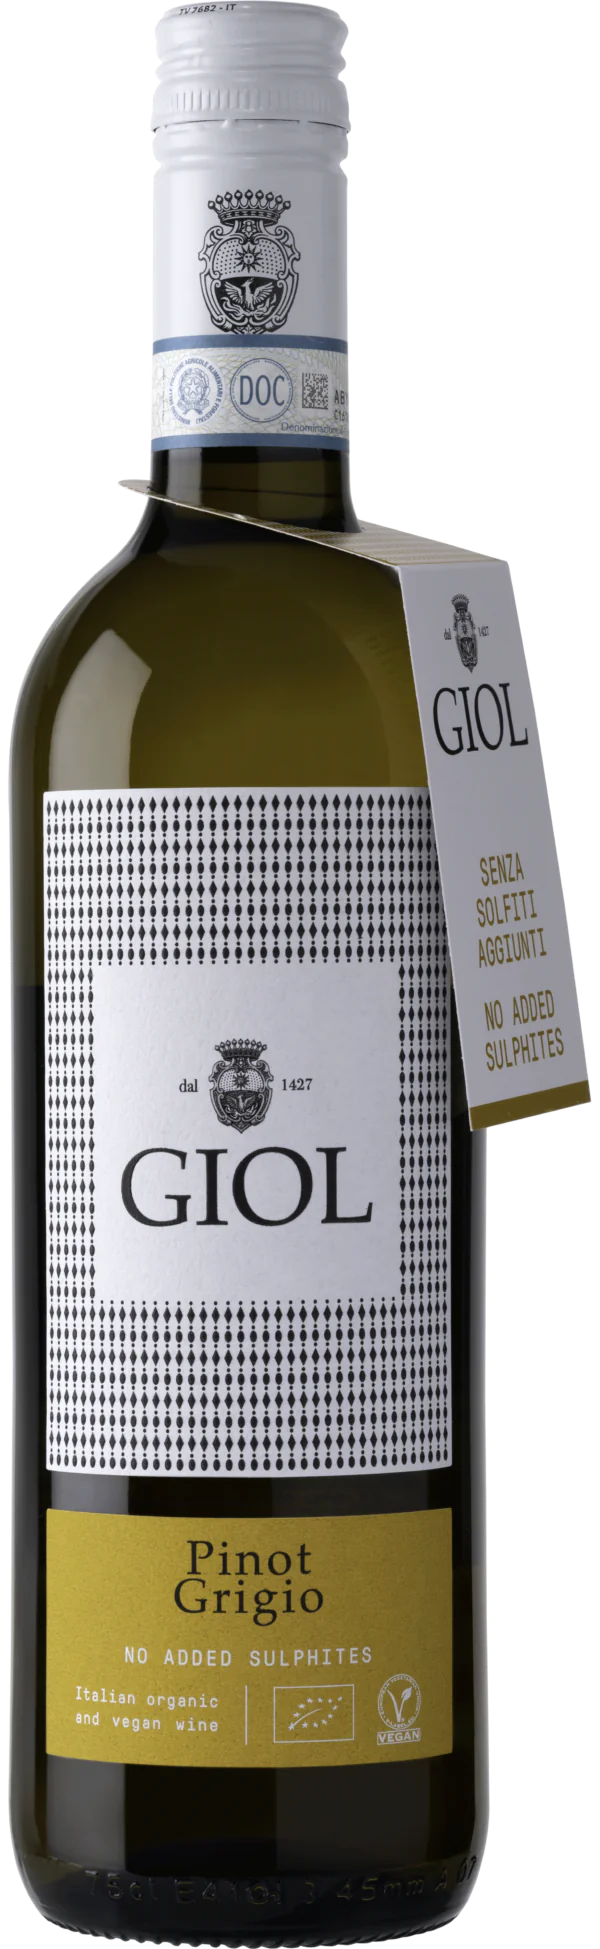 Pinot Grigio - Giol